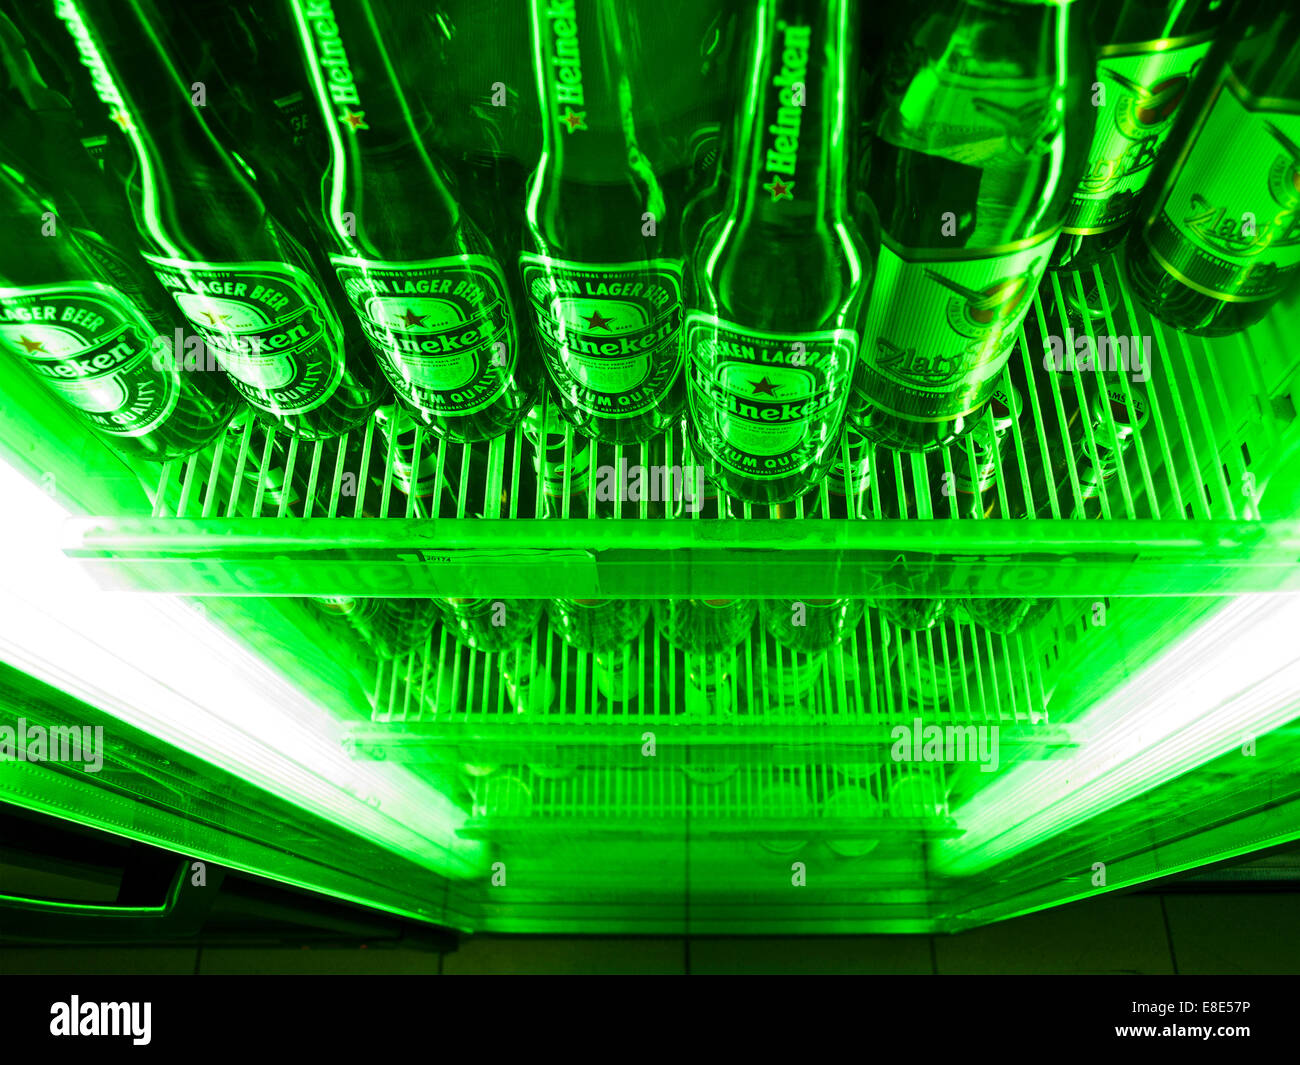 Heineken European beer inside shop refrigerator Stock Photo